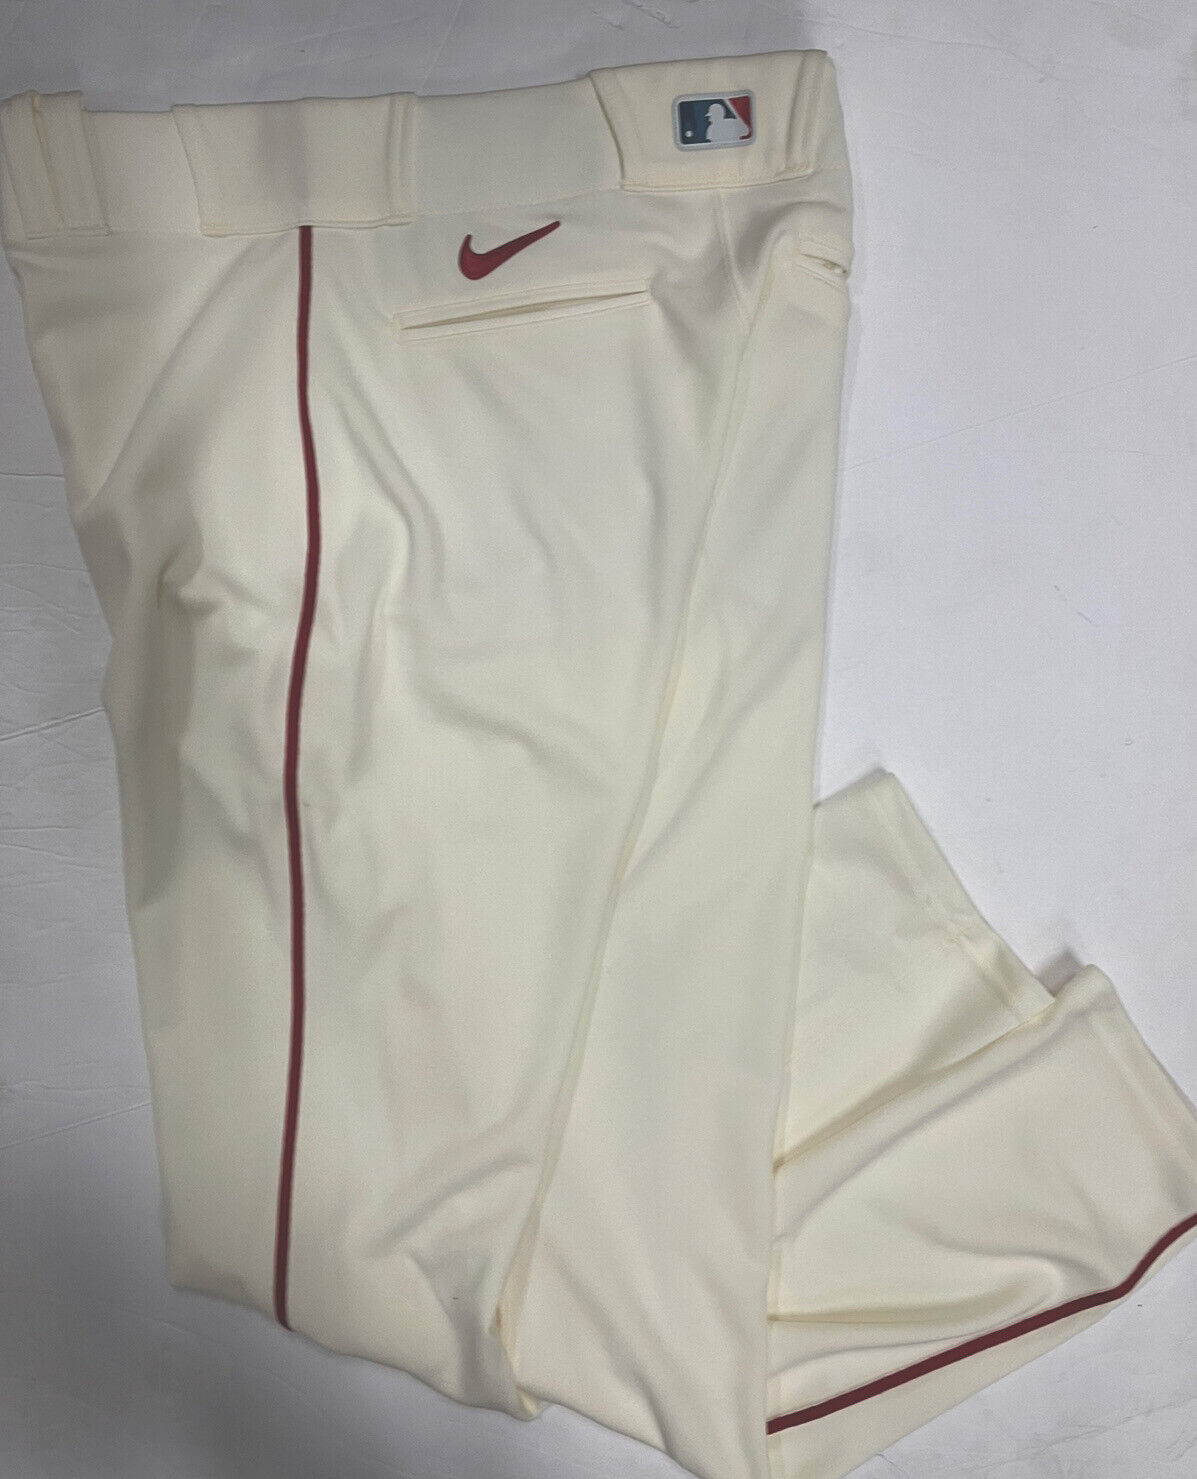 Majestic Pro Flex Base Baseball Pants Grey With Red Piping 37 Long Inseam